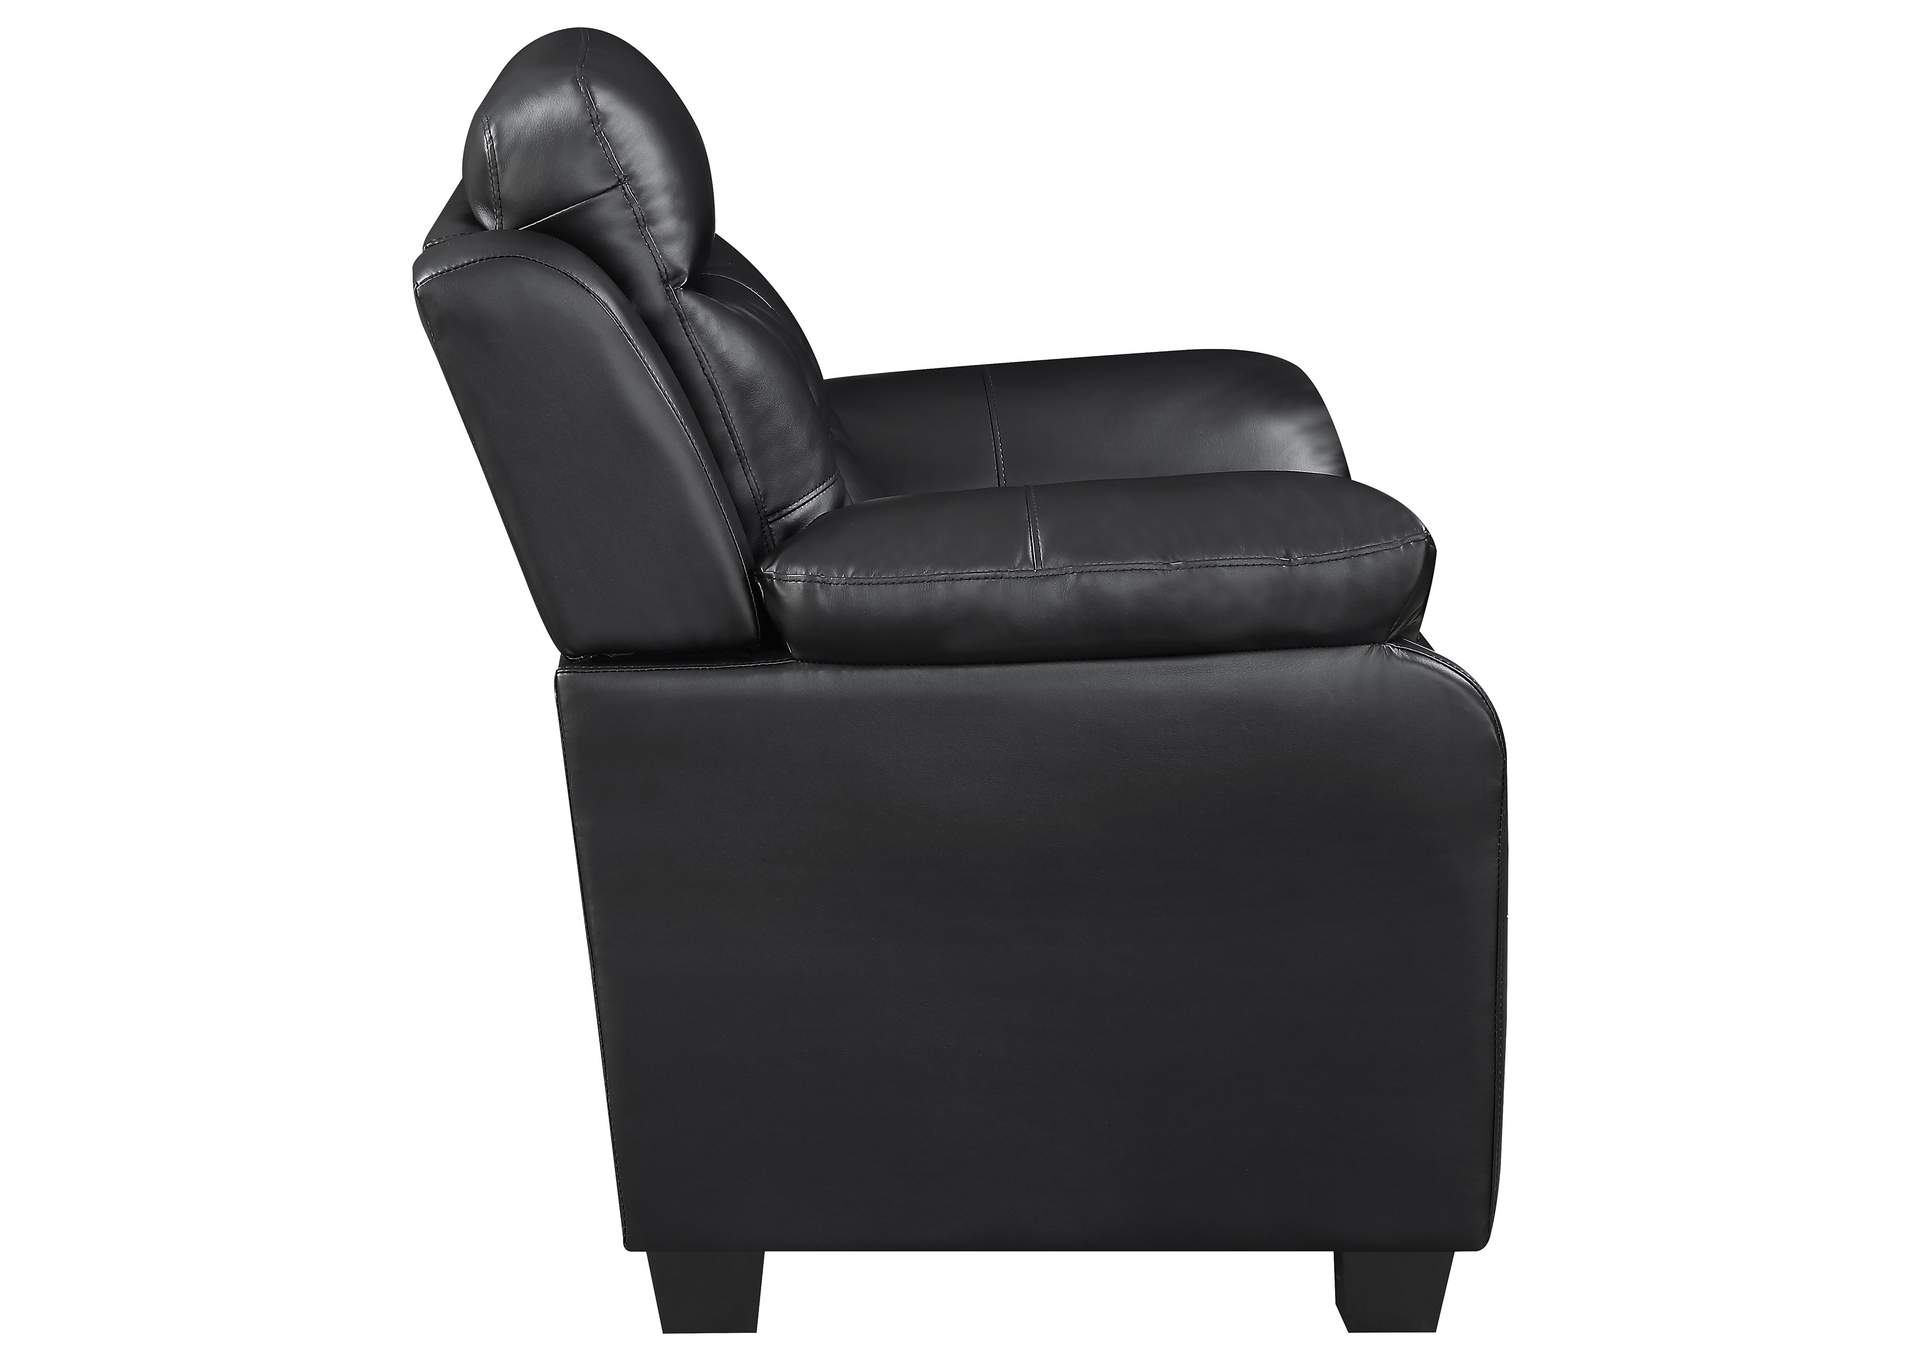 Finley Tufted Upholstered Sofa Black,Coaster Furniture